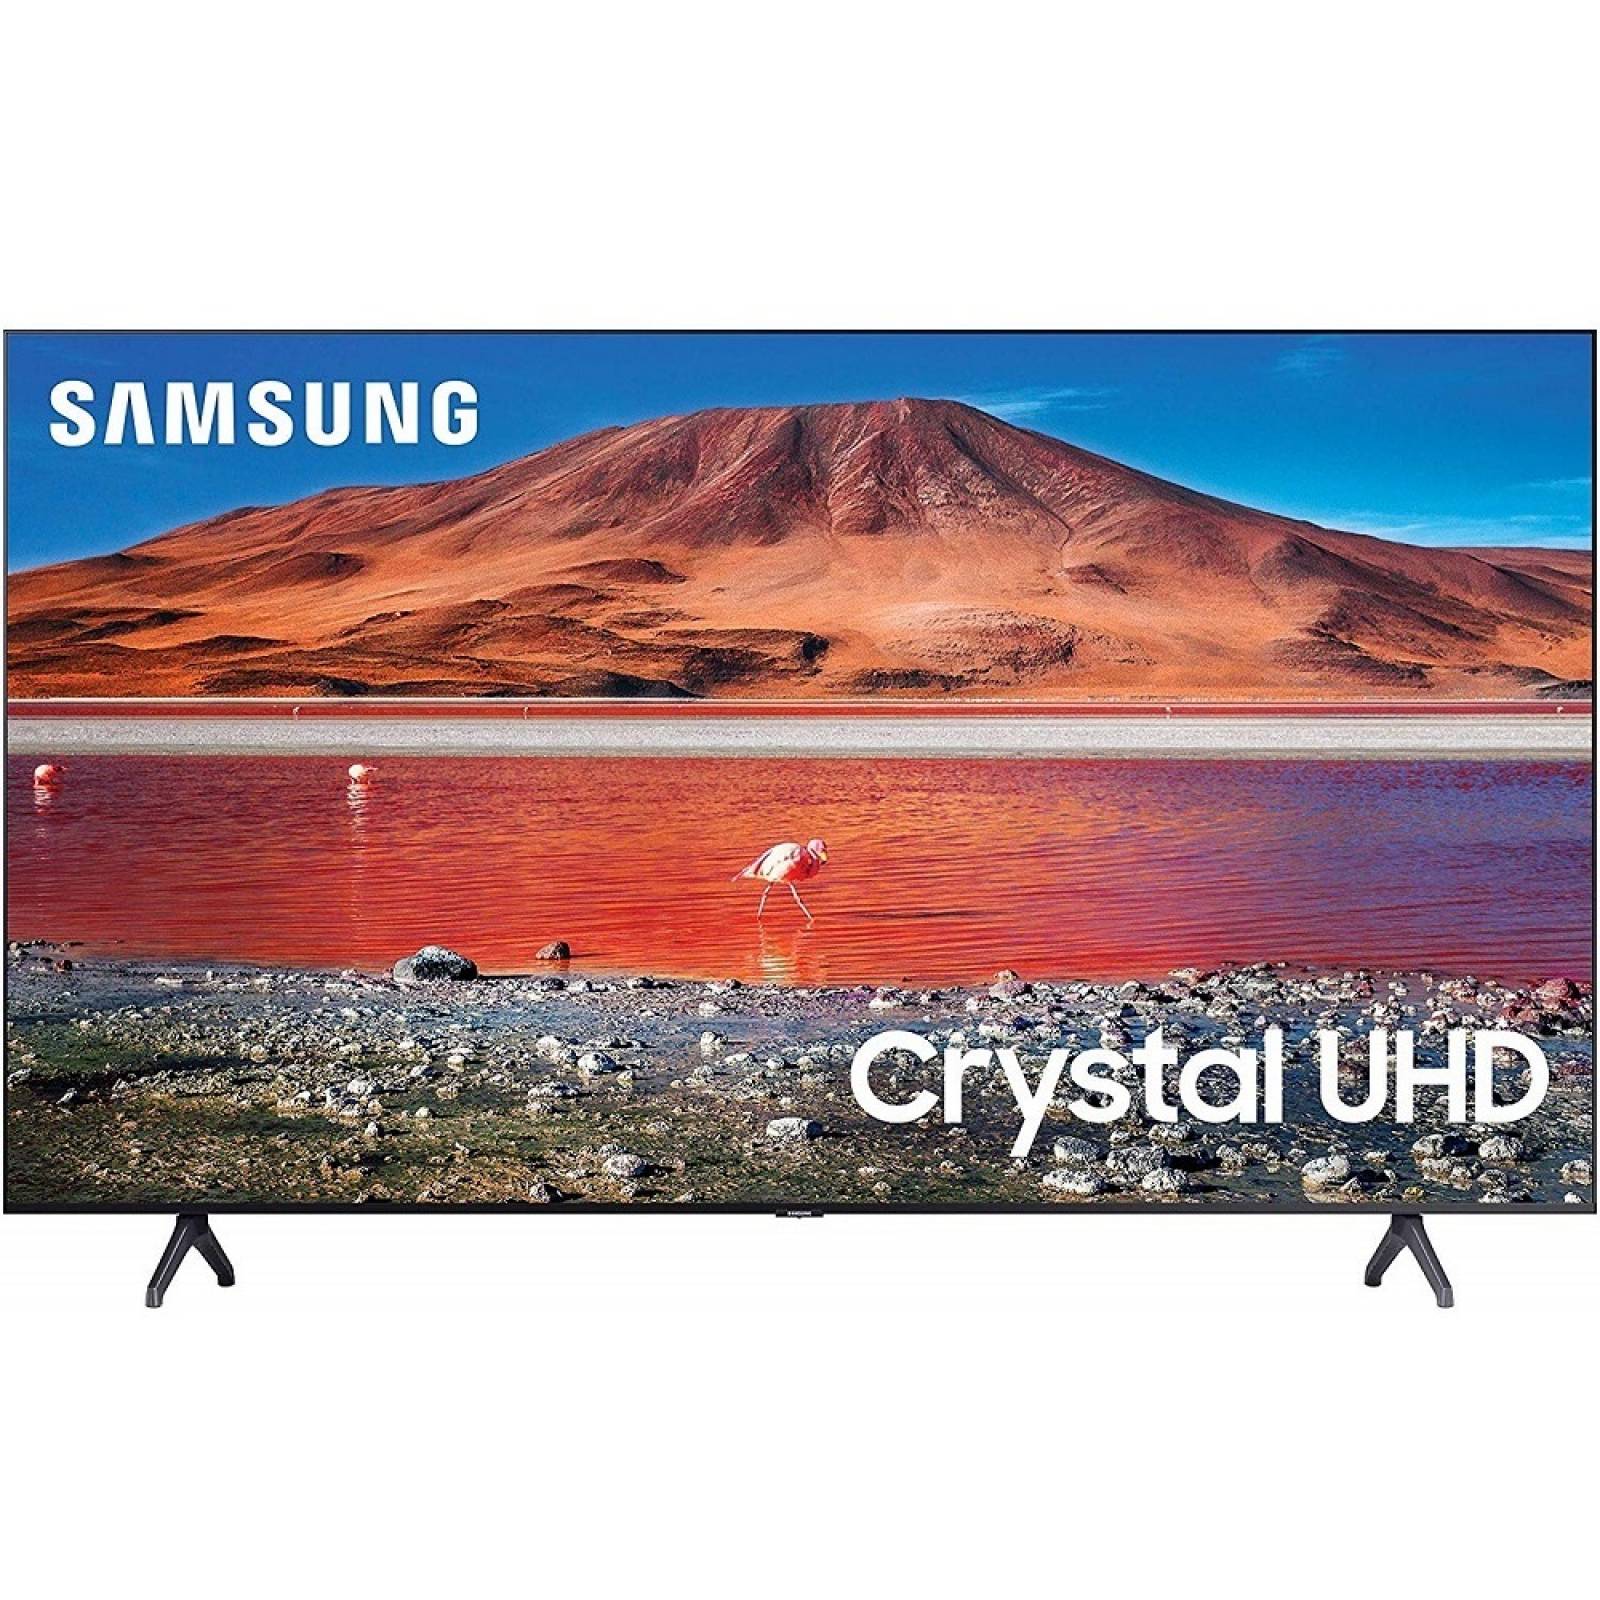 Smart TV Samsung 58 4K HDR10 Engine Crystal UN58TU7000